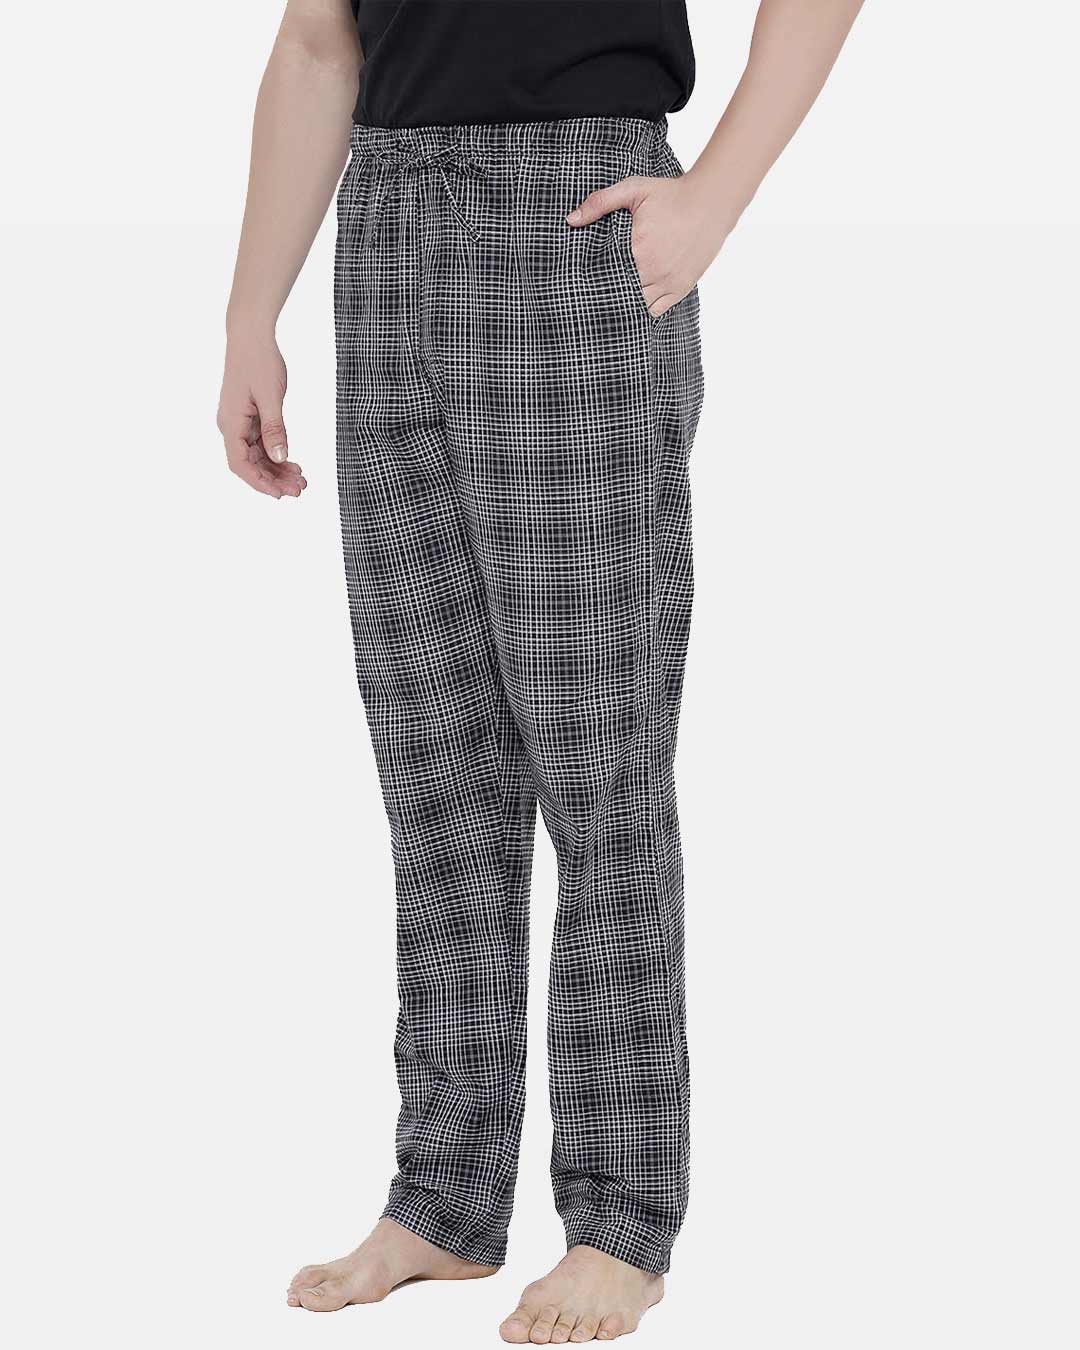 Shop Super Combed Cotton Checkered Pyjamas For Men (Pack Of 1) Black & White Checks-Back